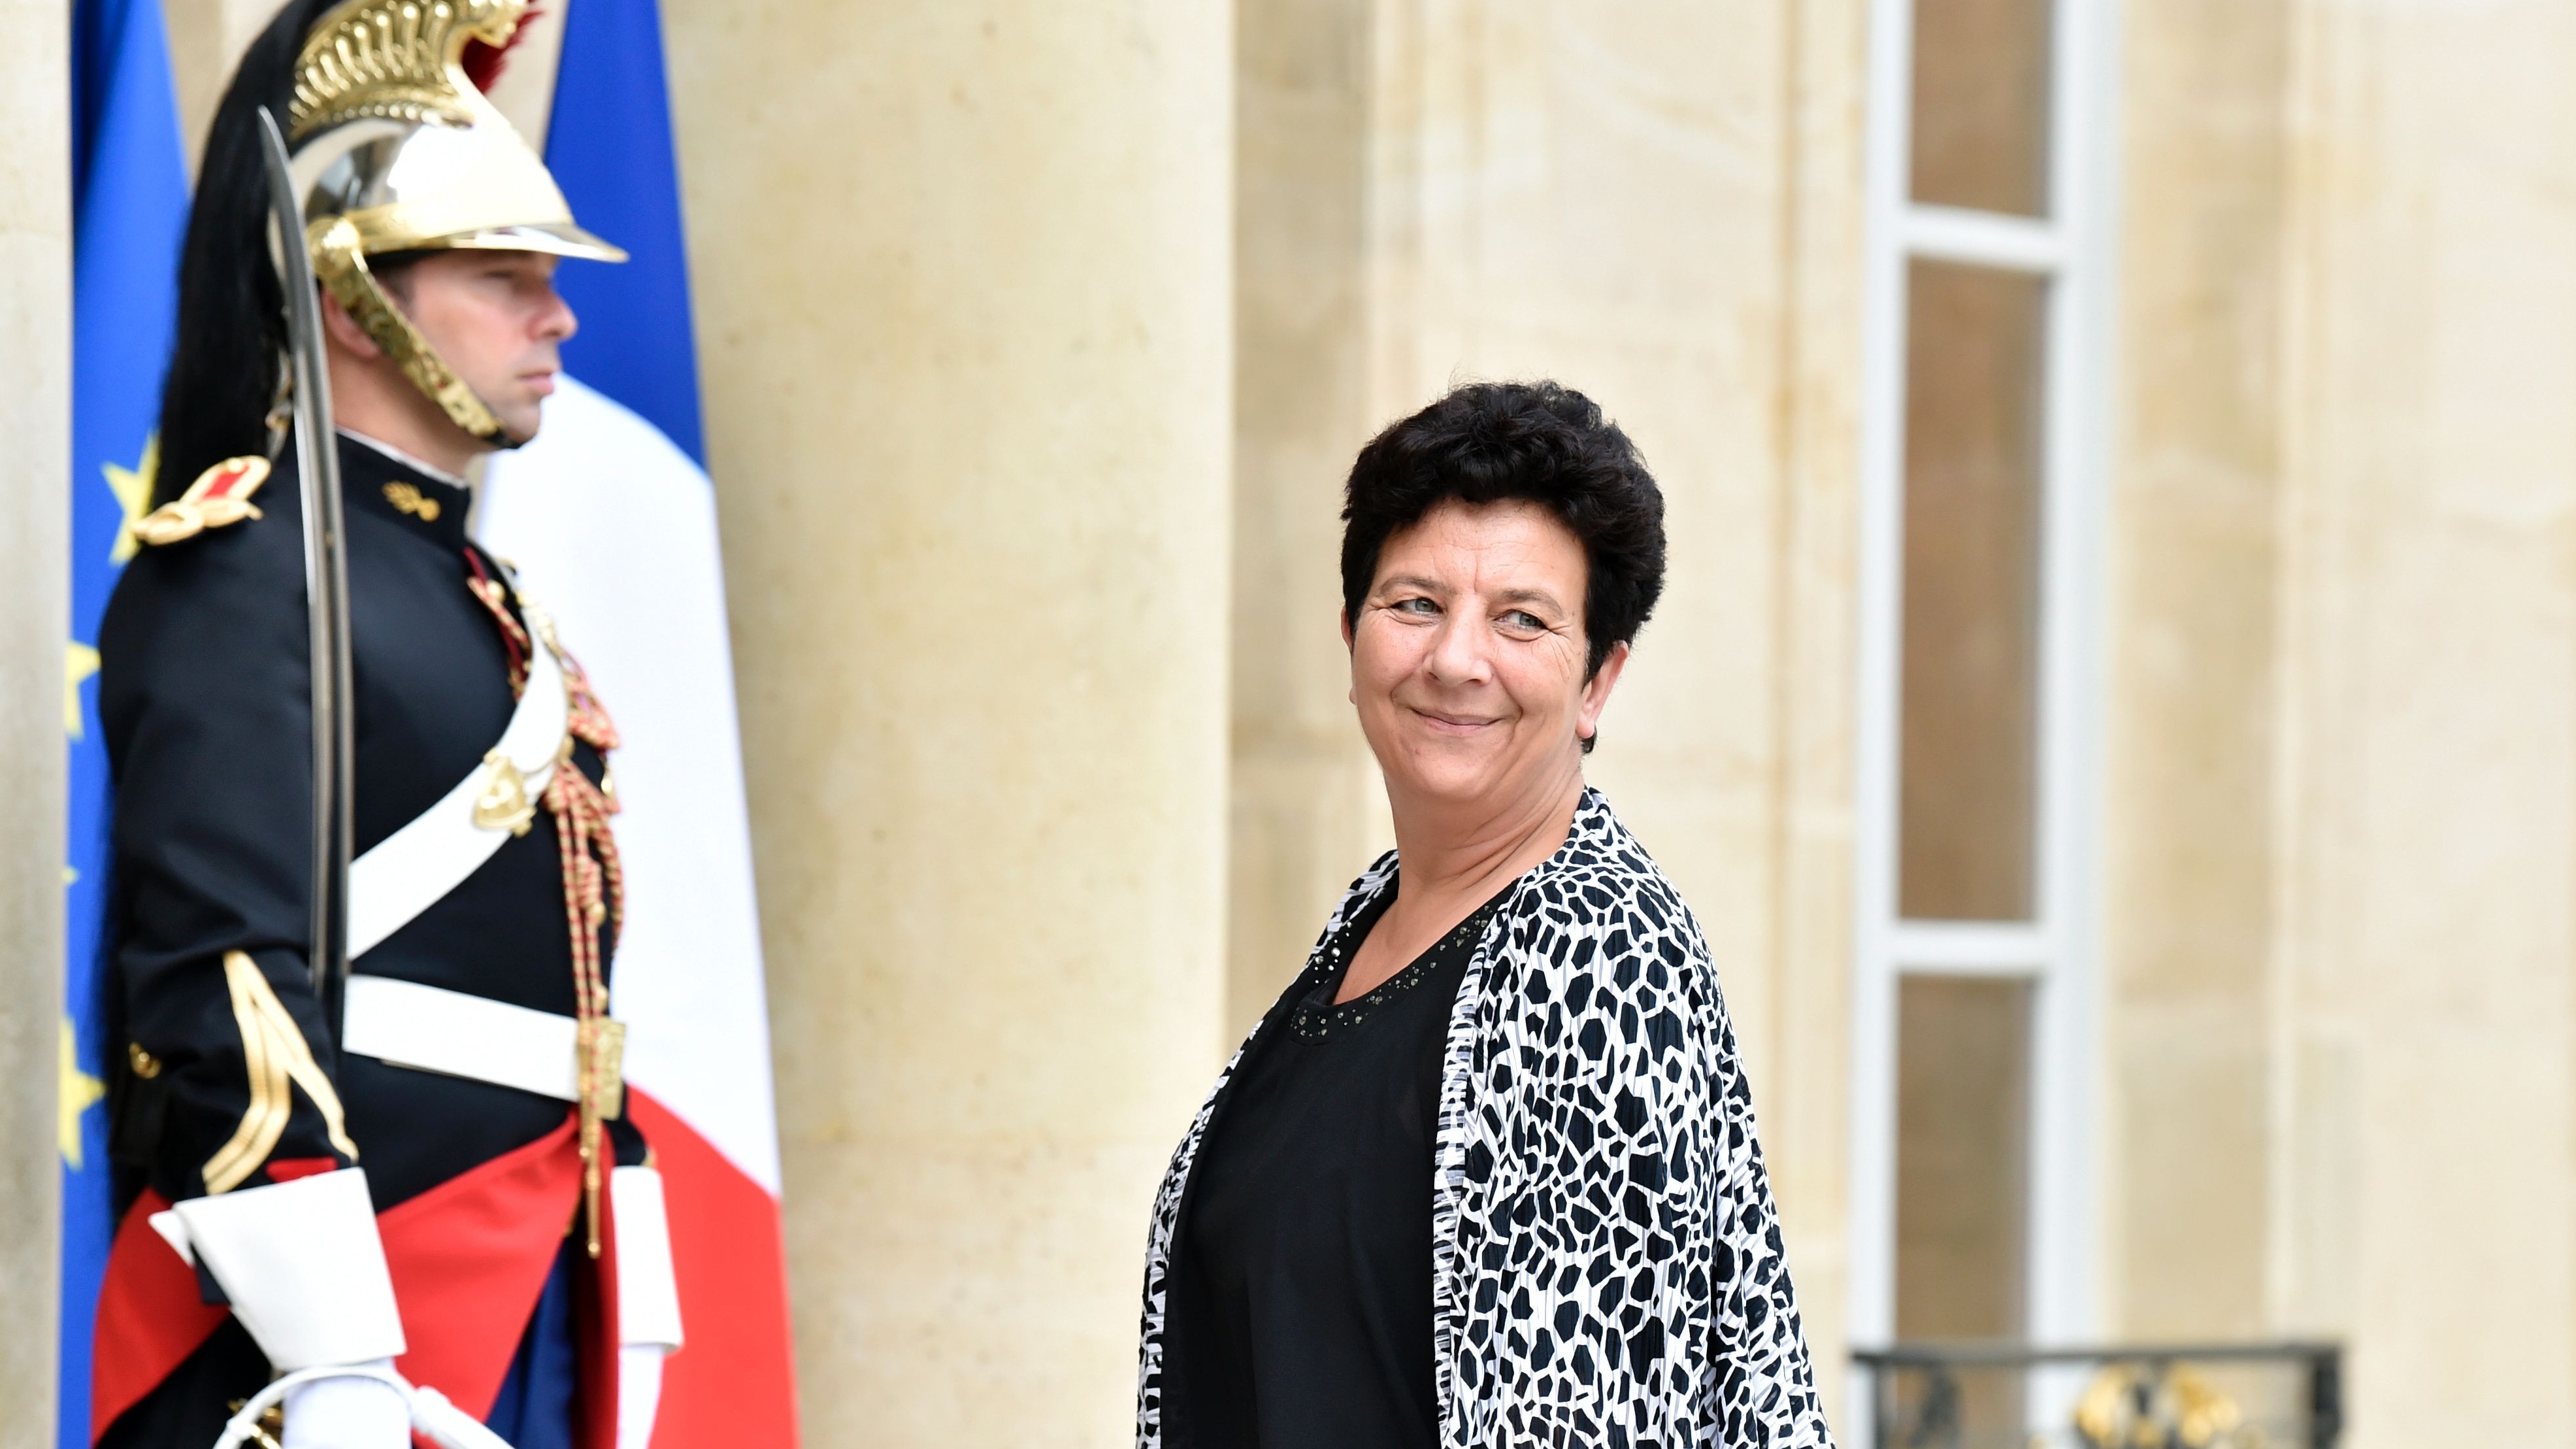 French Minister of Higher Education Frédérique Vidal